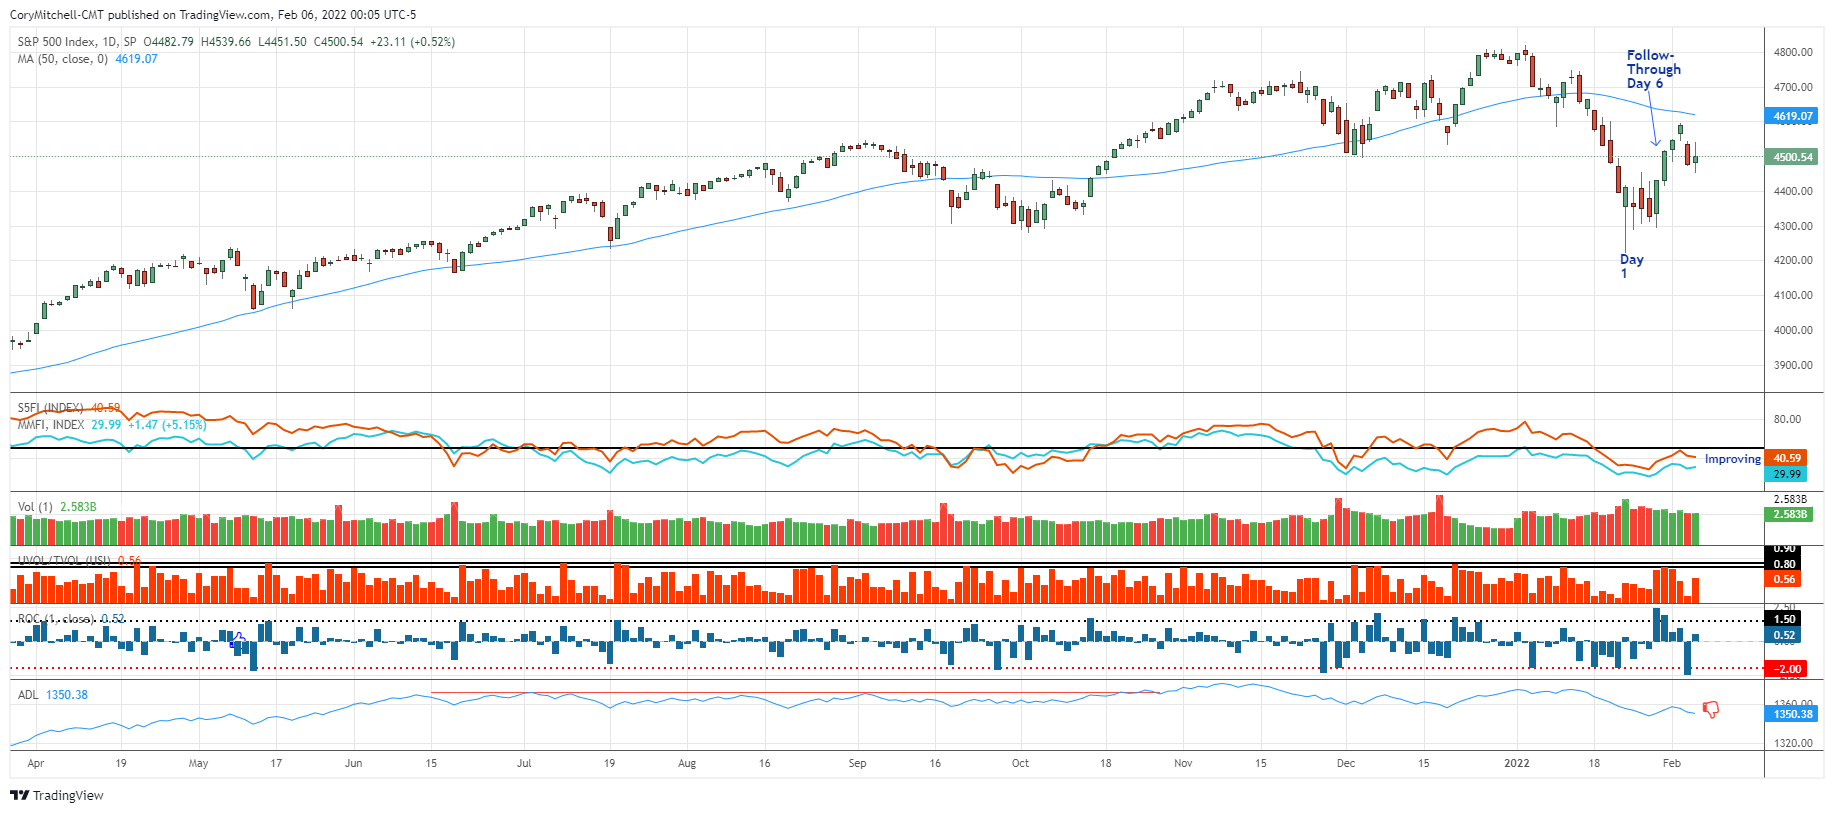 S&P 500 with stock market health indicators